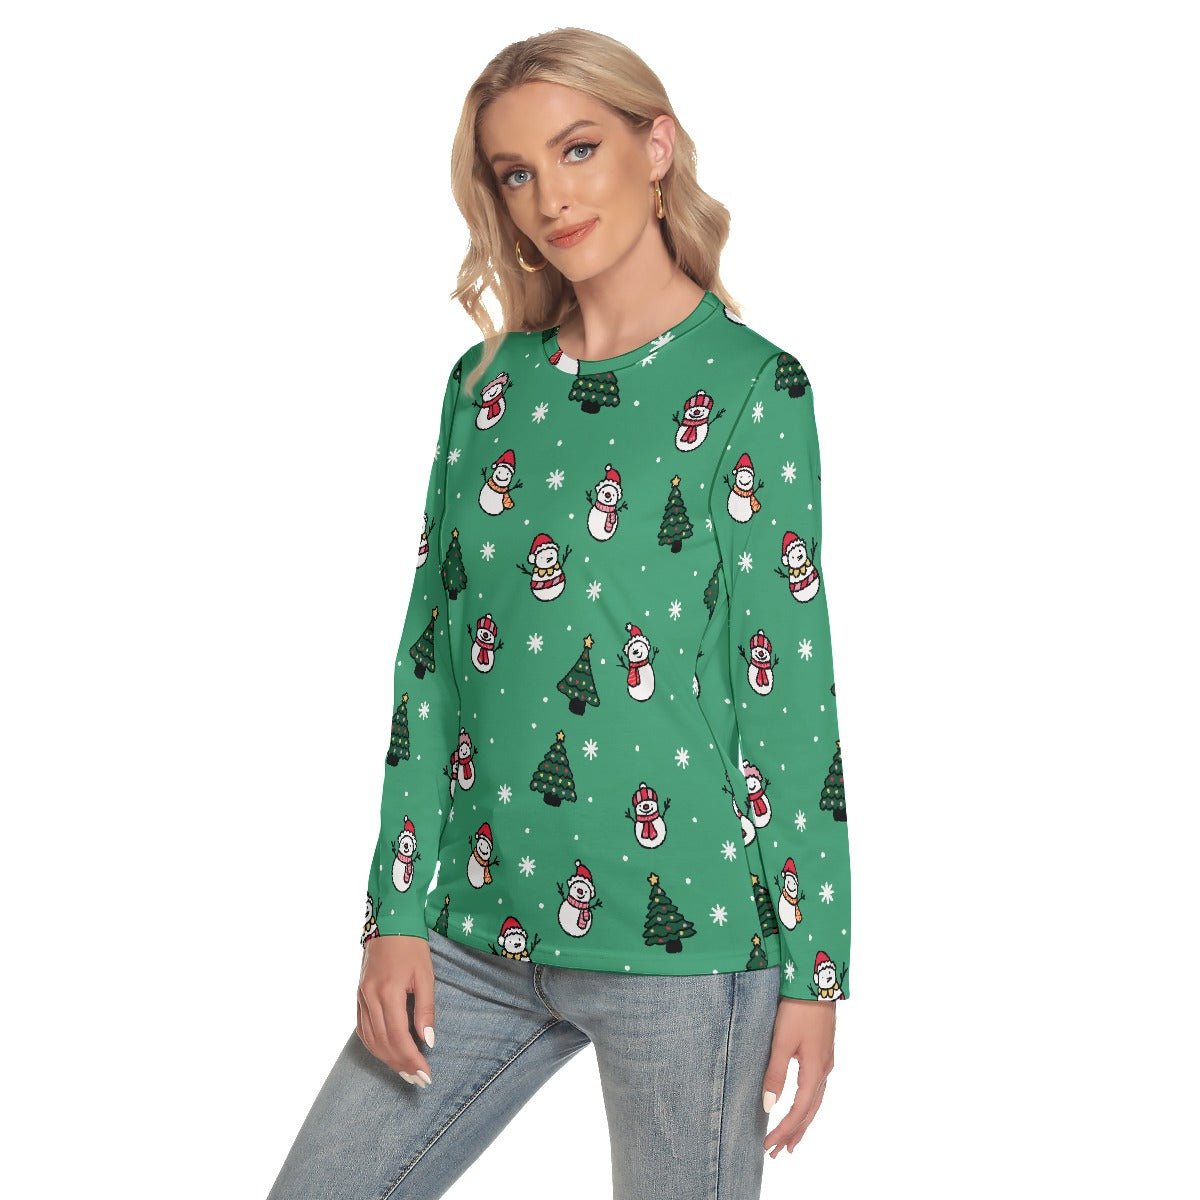 Women's Long Sleeve Christmas T-shirt- Green Snowman - Festive Style